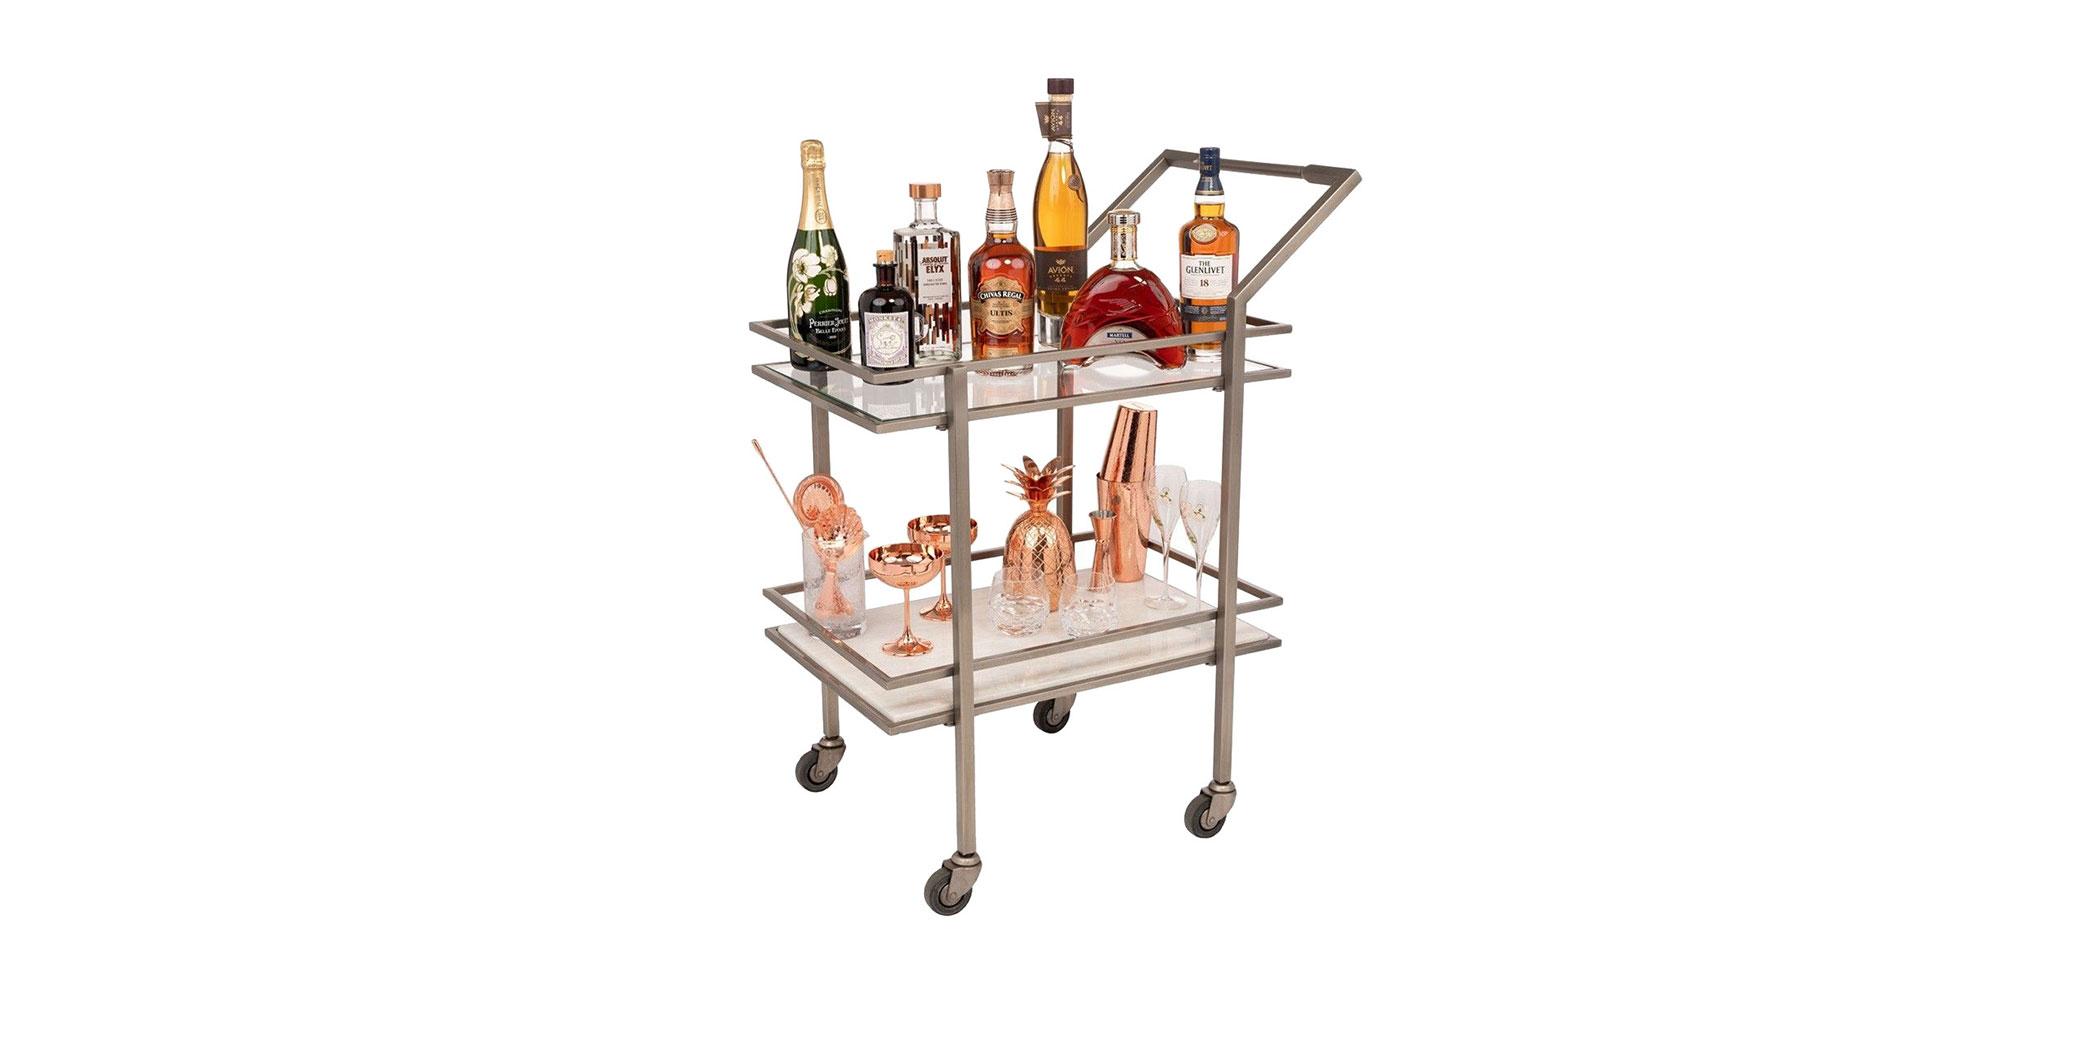 A sleek bar cart from Pernod Ricard